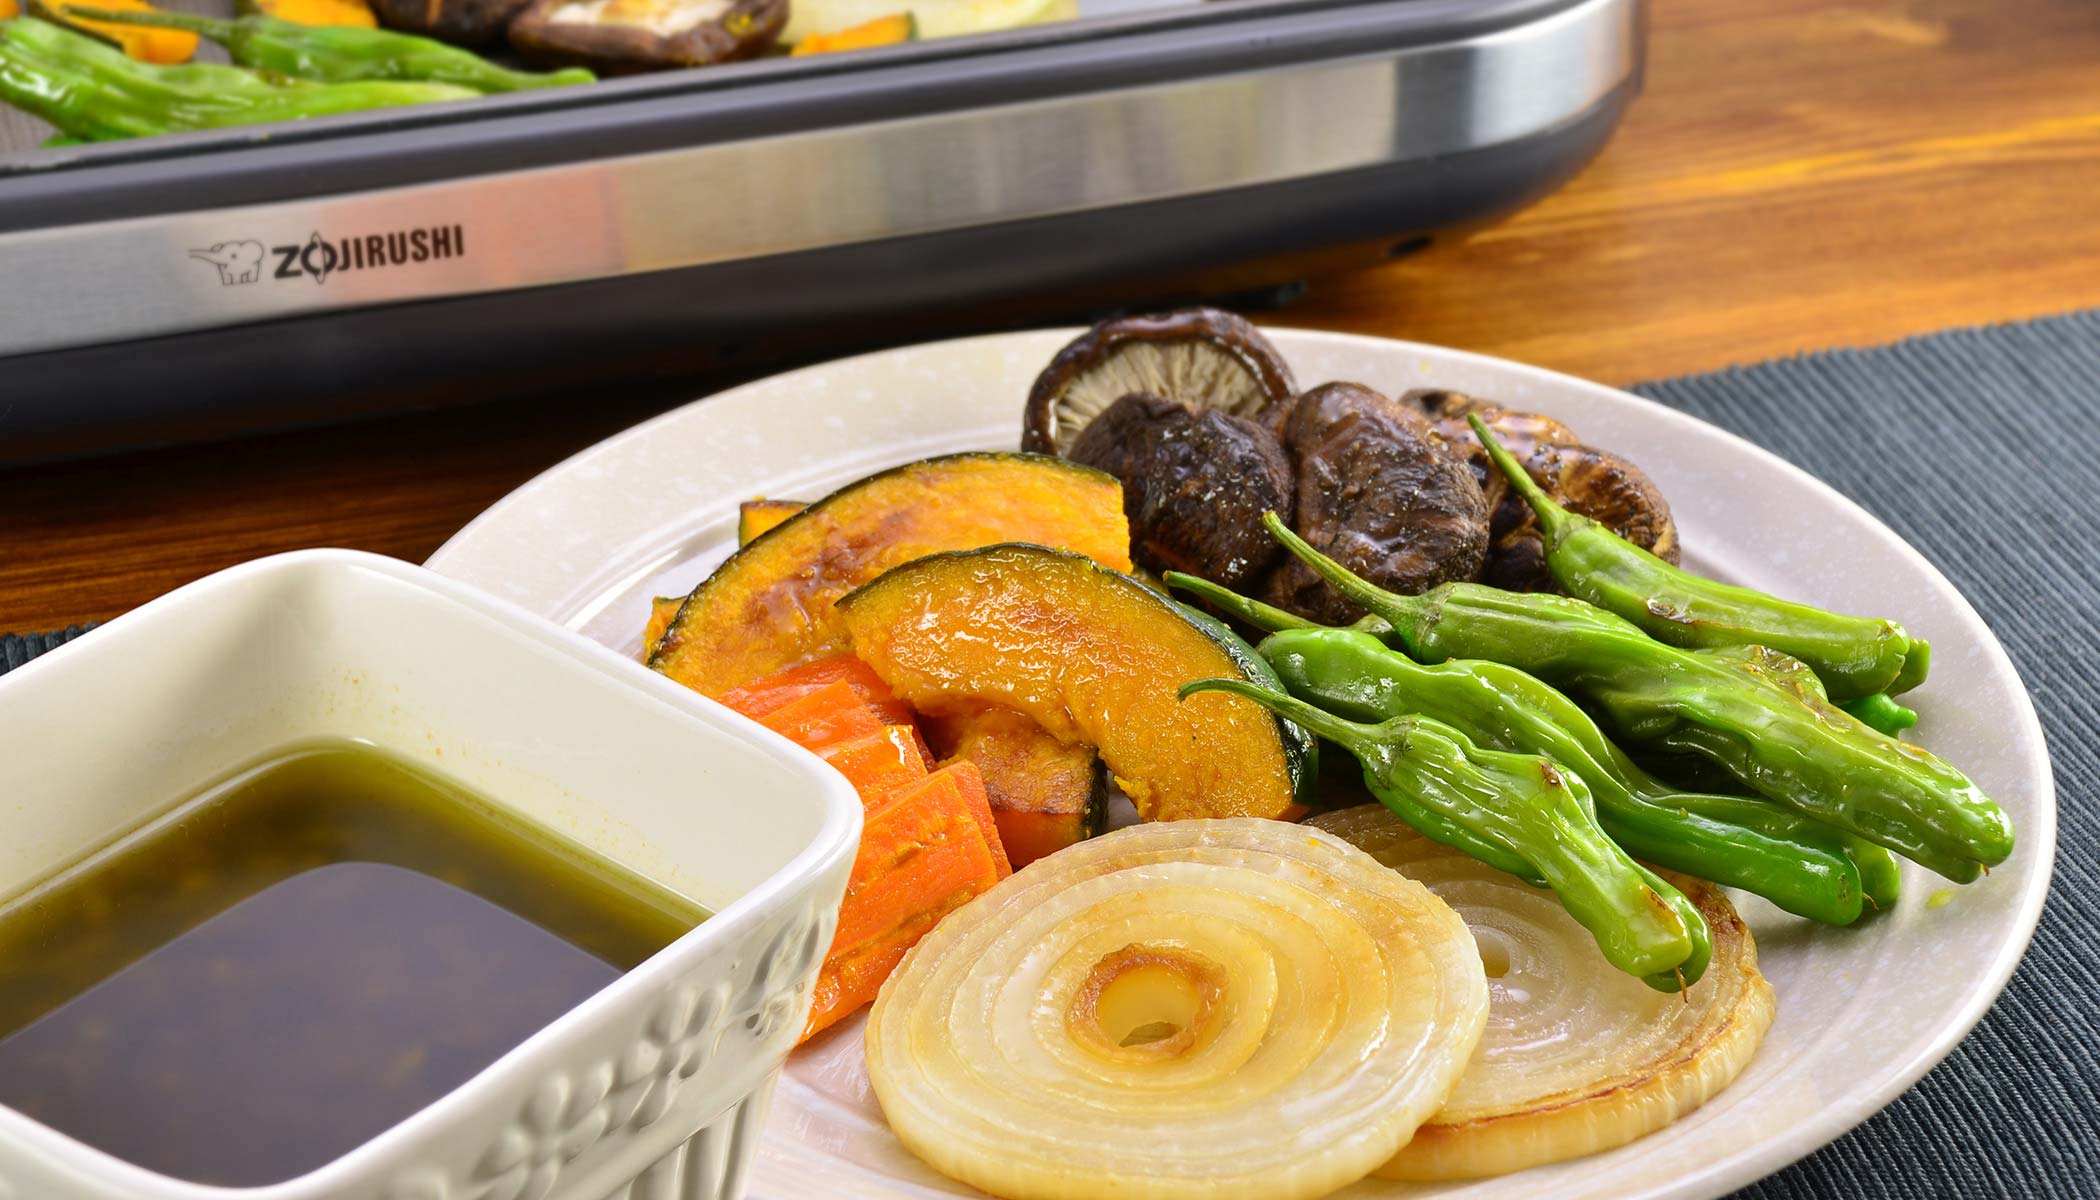 Zojirushi Recipe – Grilled Vegetables with Balsamic Vinegar Sauce